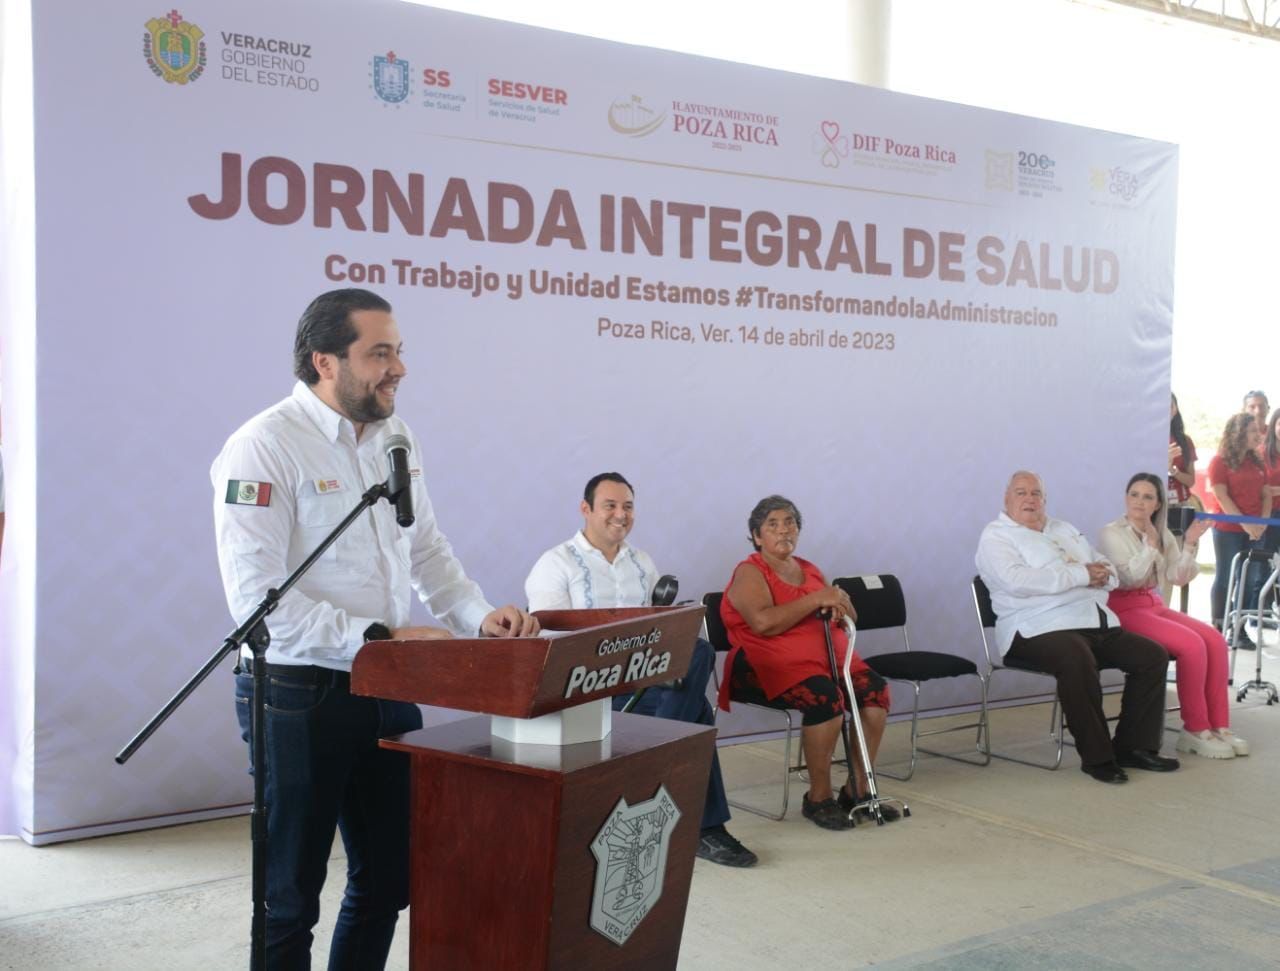 Exitosa Jornada Integral de Salud de SS|SESVER en Poza Rica